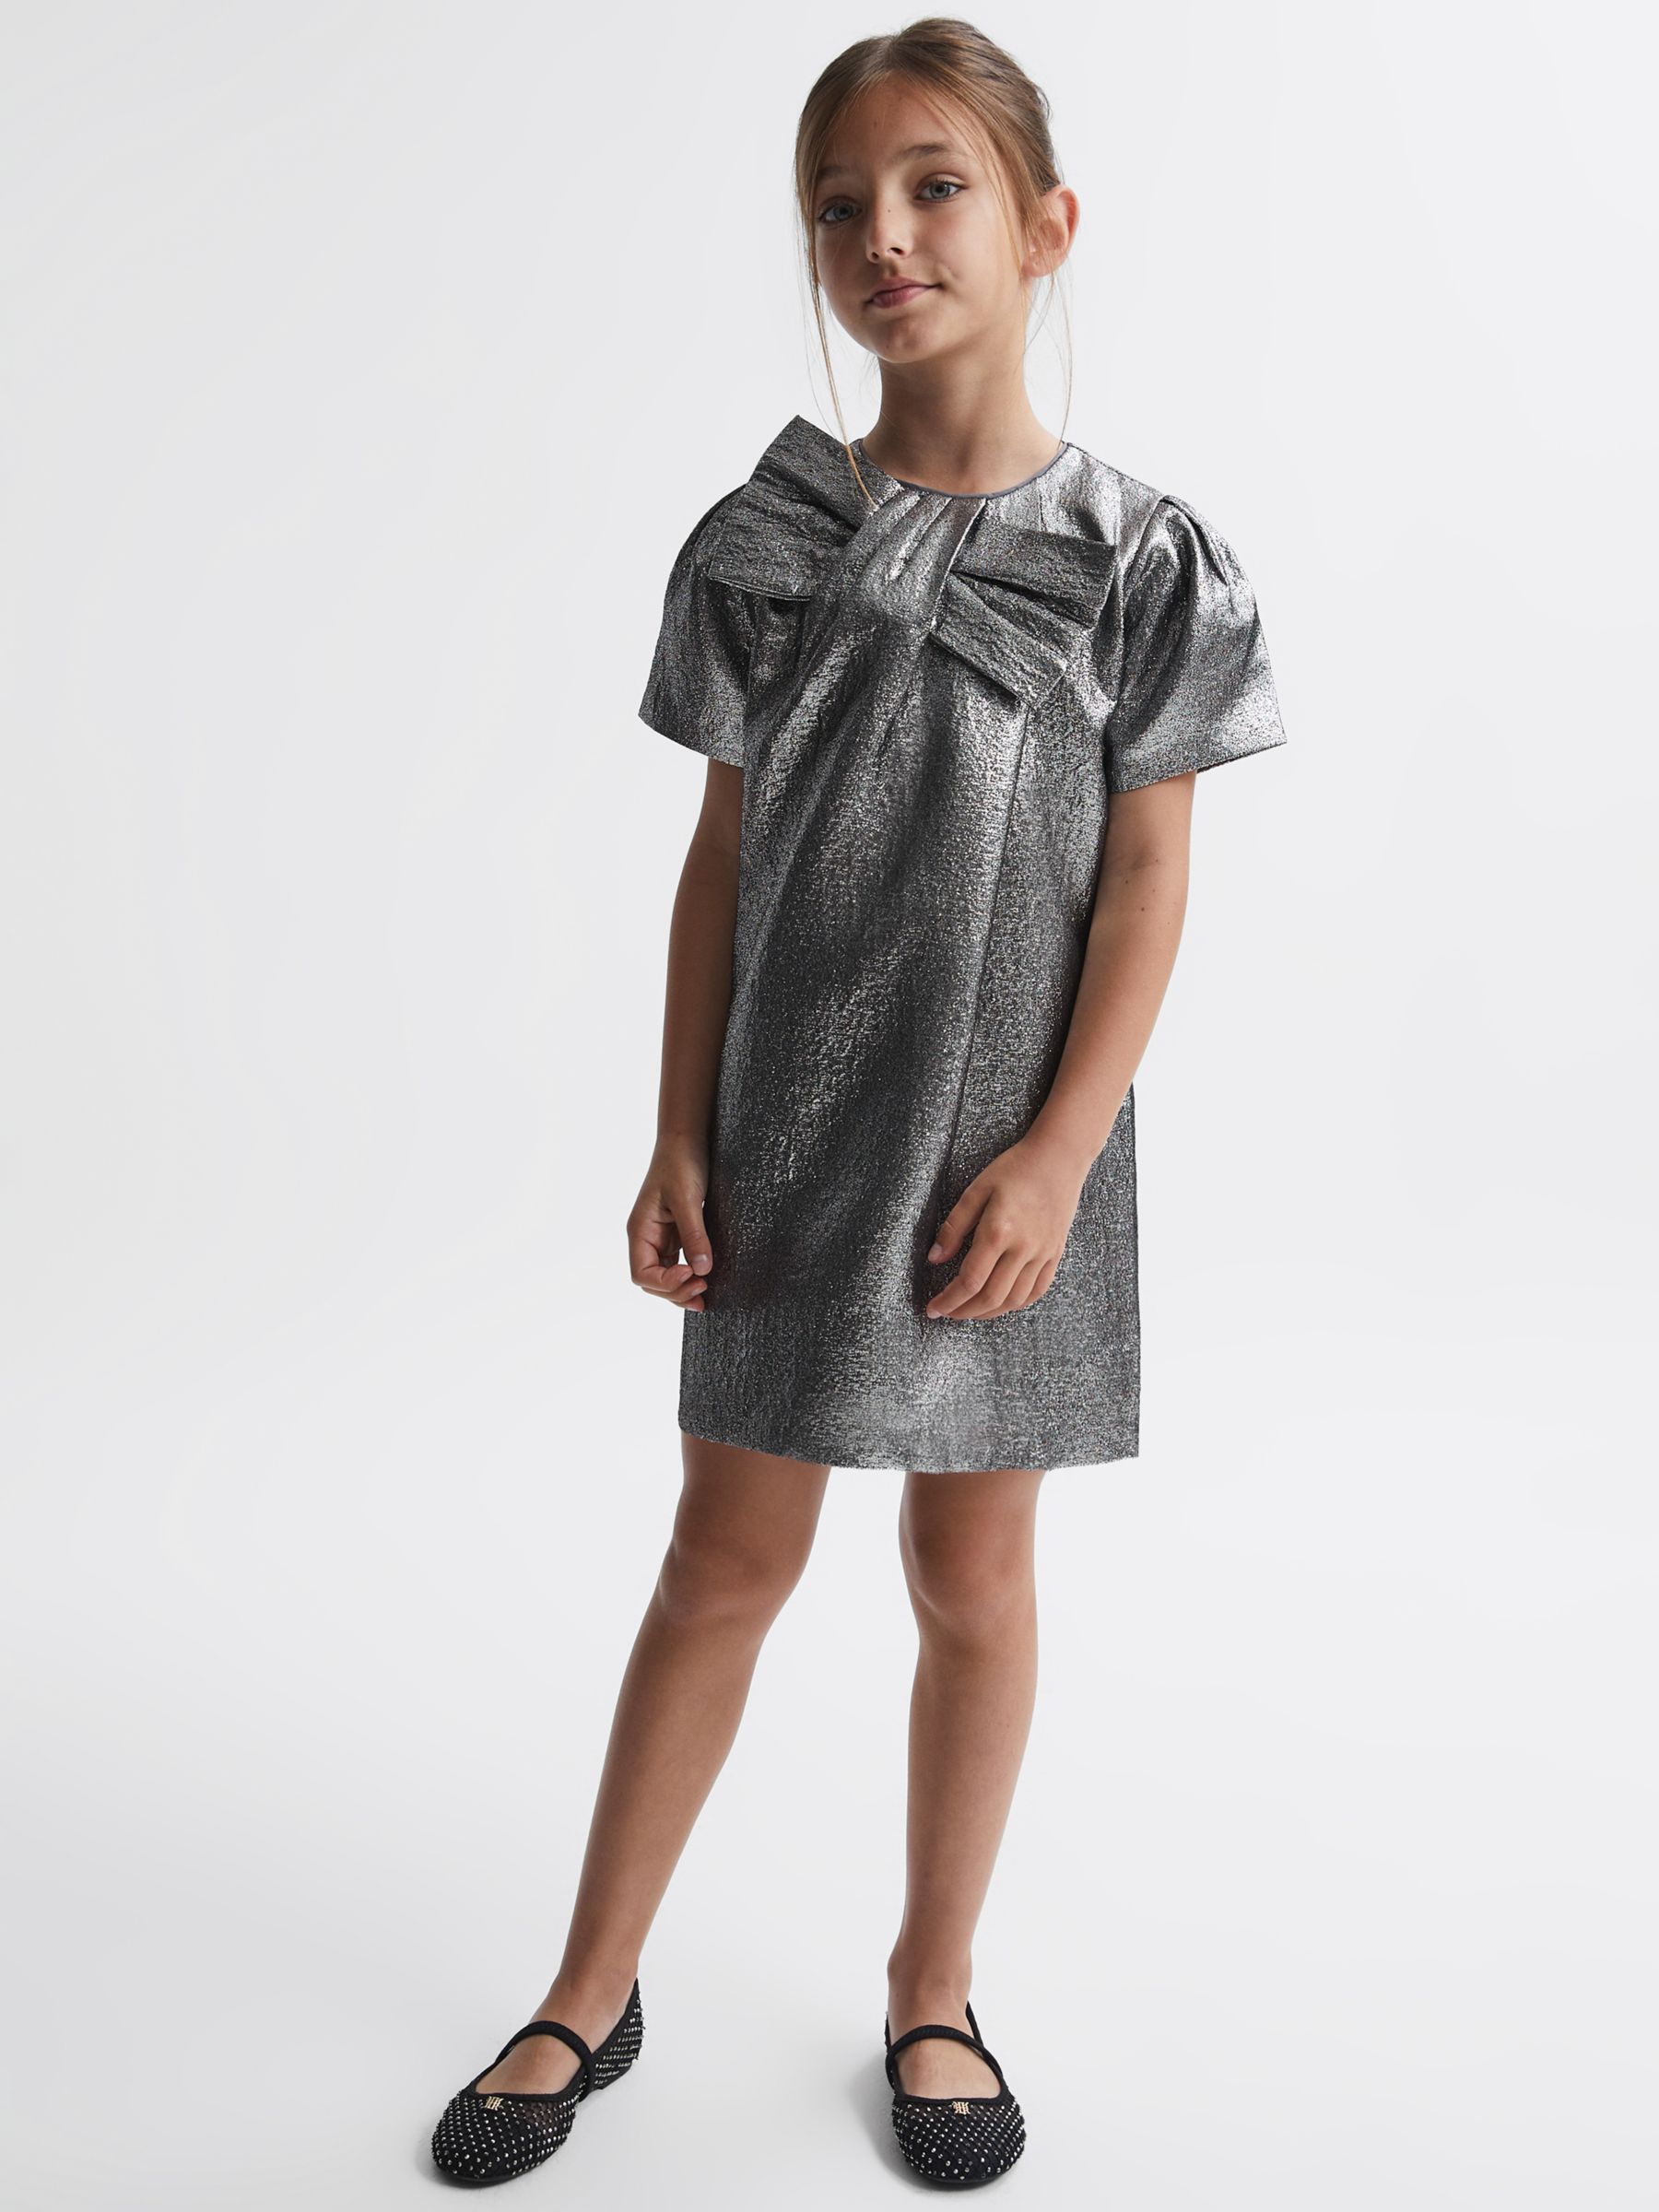 Reiss Kids' Franny Metallic Bow Dress, Silver at John Lewis & Partners